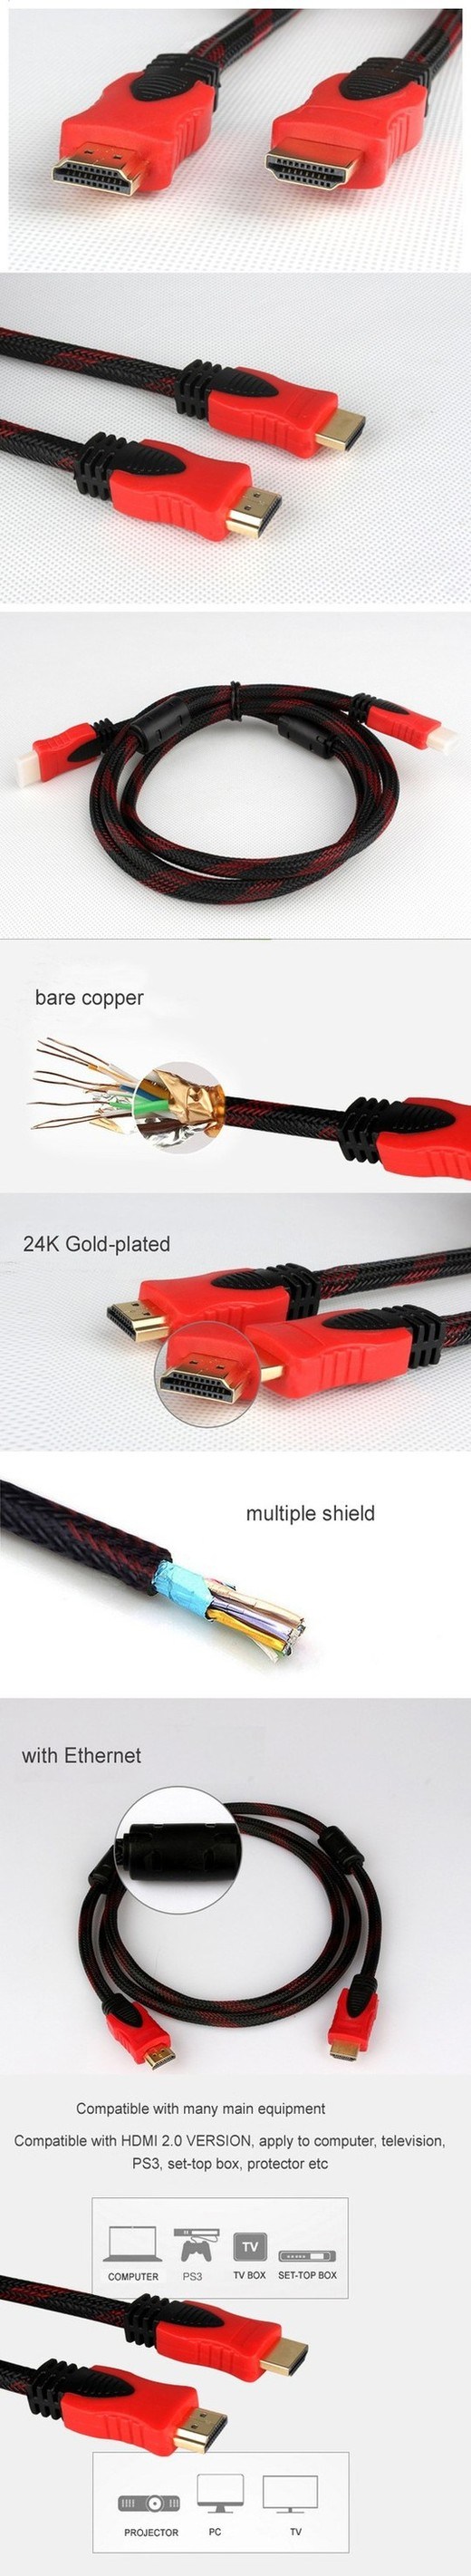 AV Data Communication HDMI Cable with Ferrite (pH3-1036)